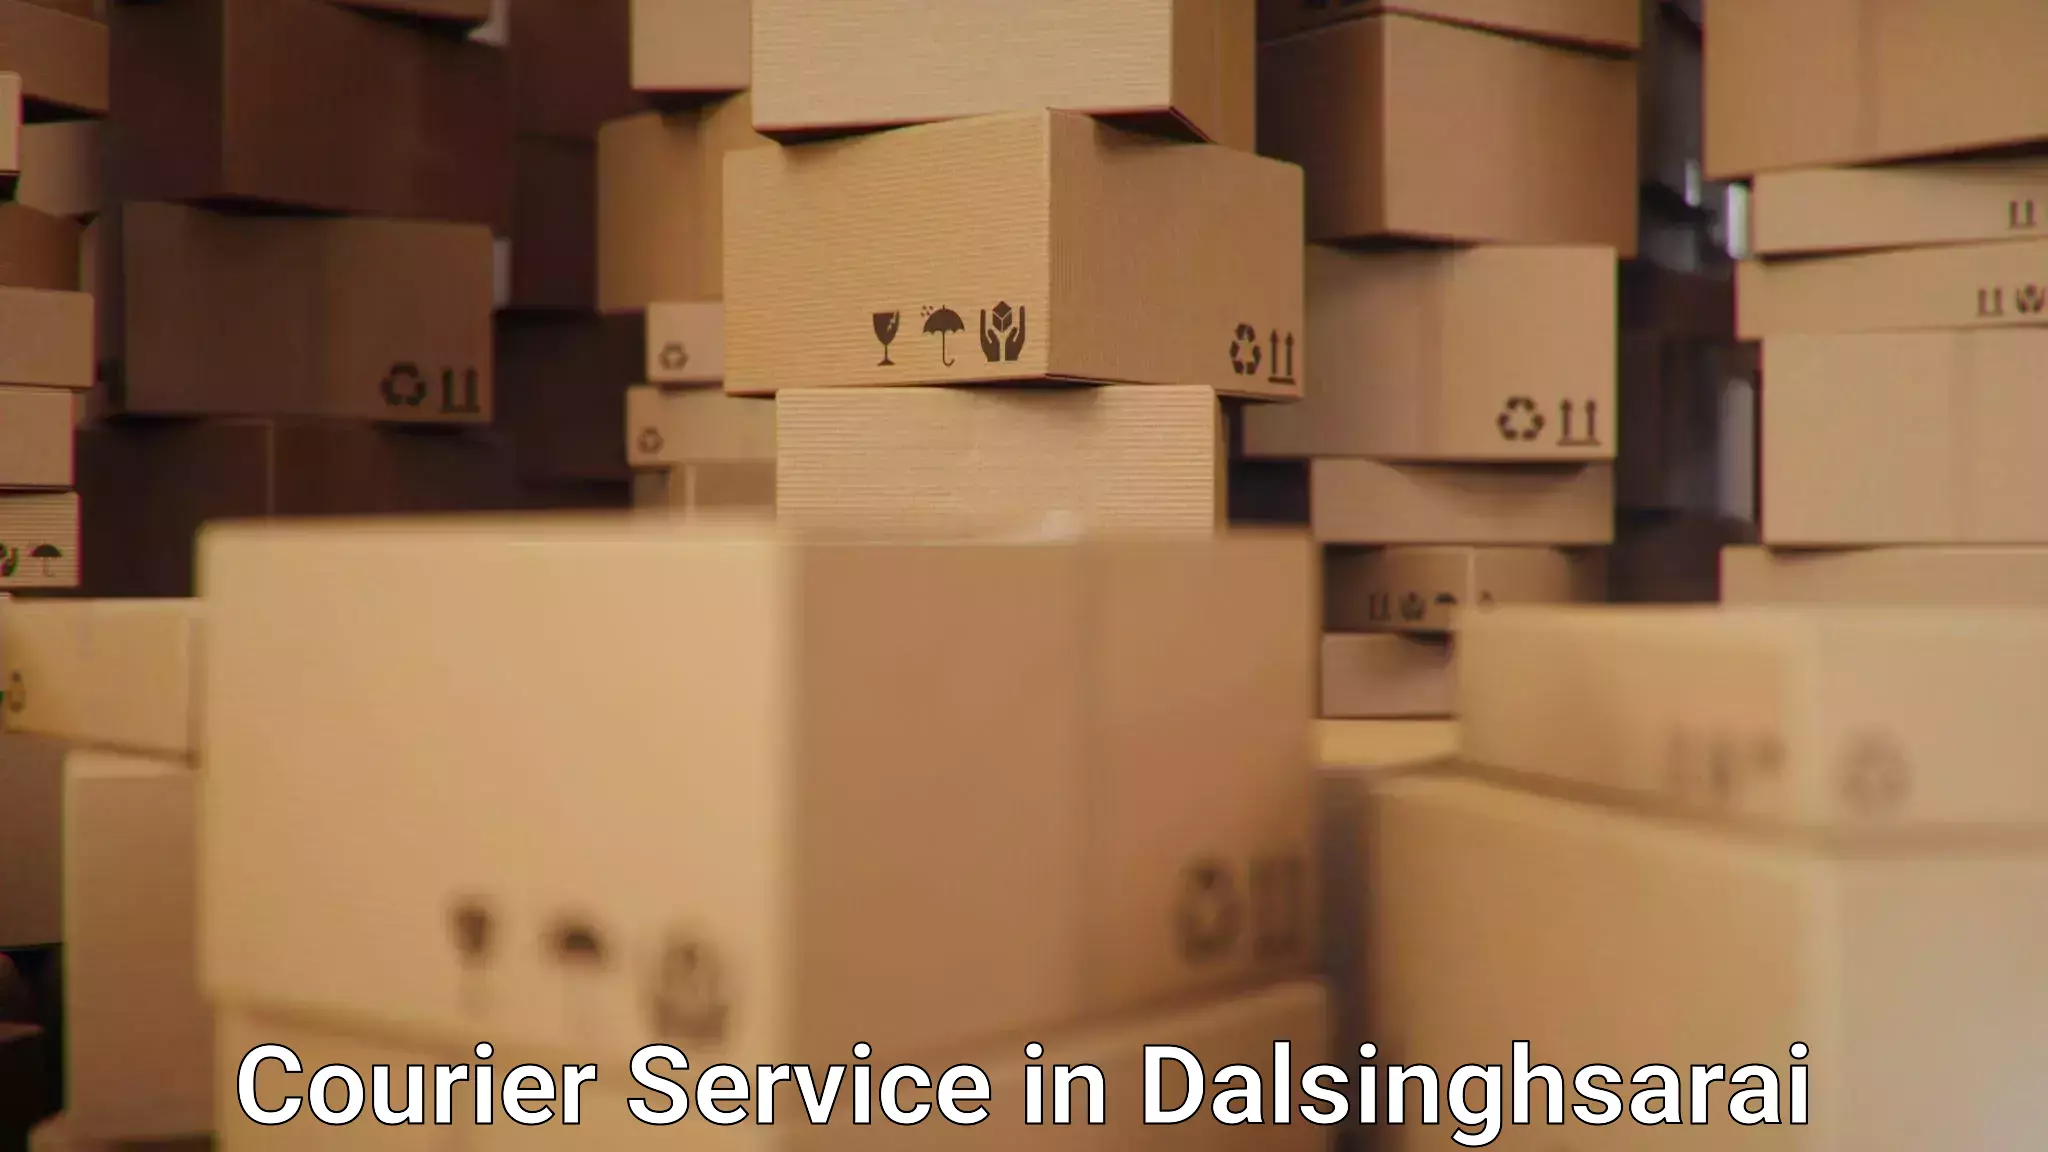 Domestic delivery options in Dalsinghsarai